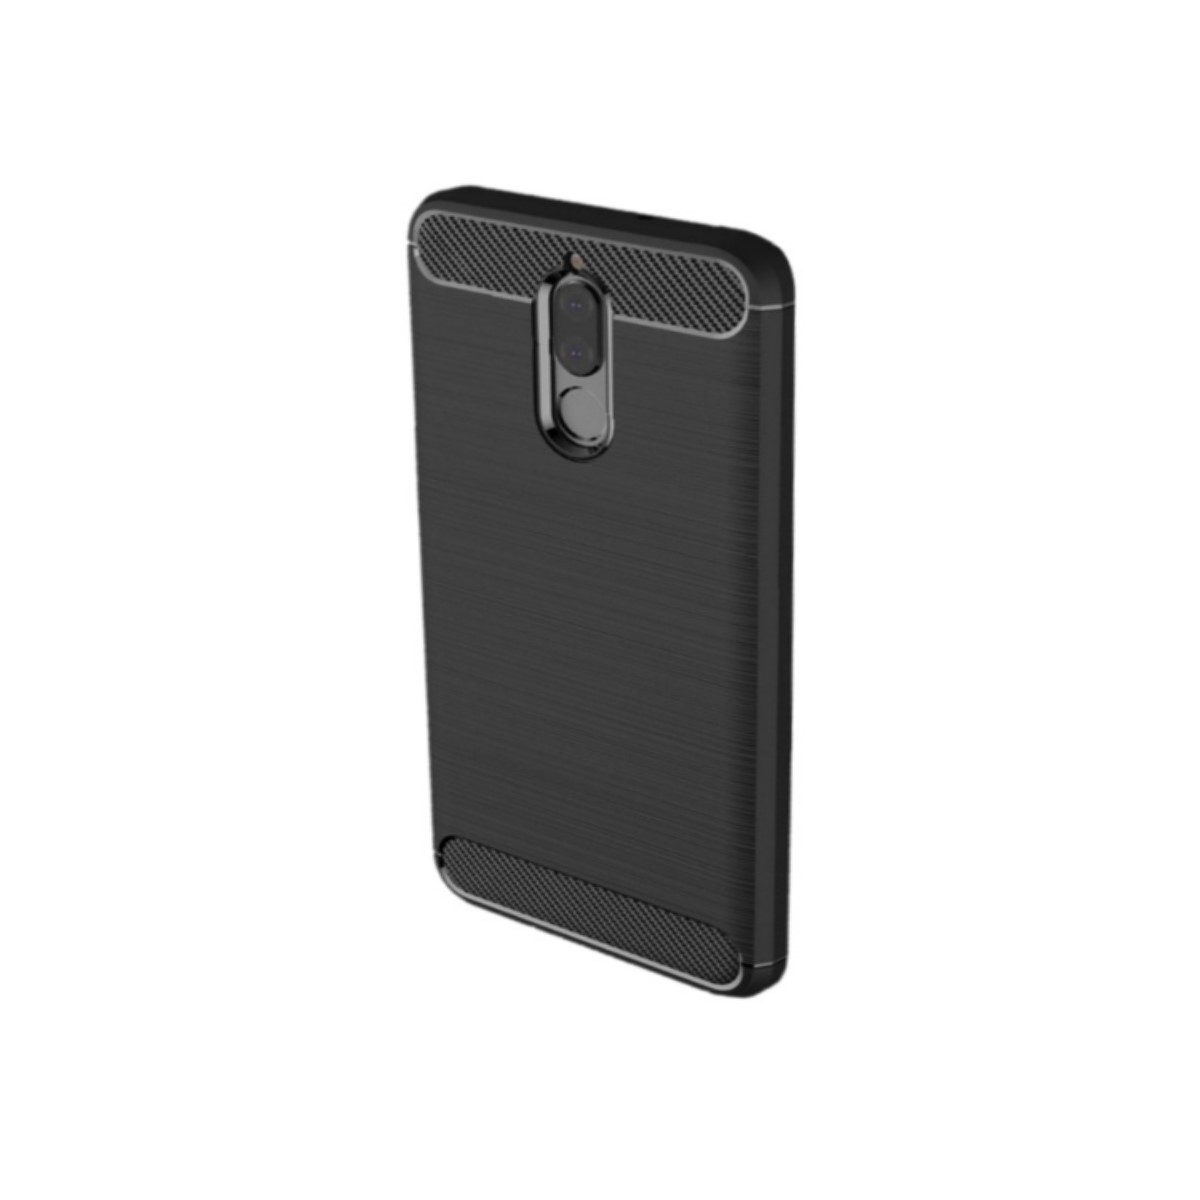 COVERKINGZ Handycase im Carbon Look, Lite, 10 Mate schwarz Backcover, Huawei